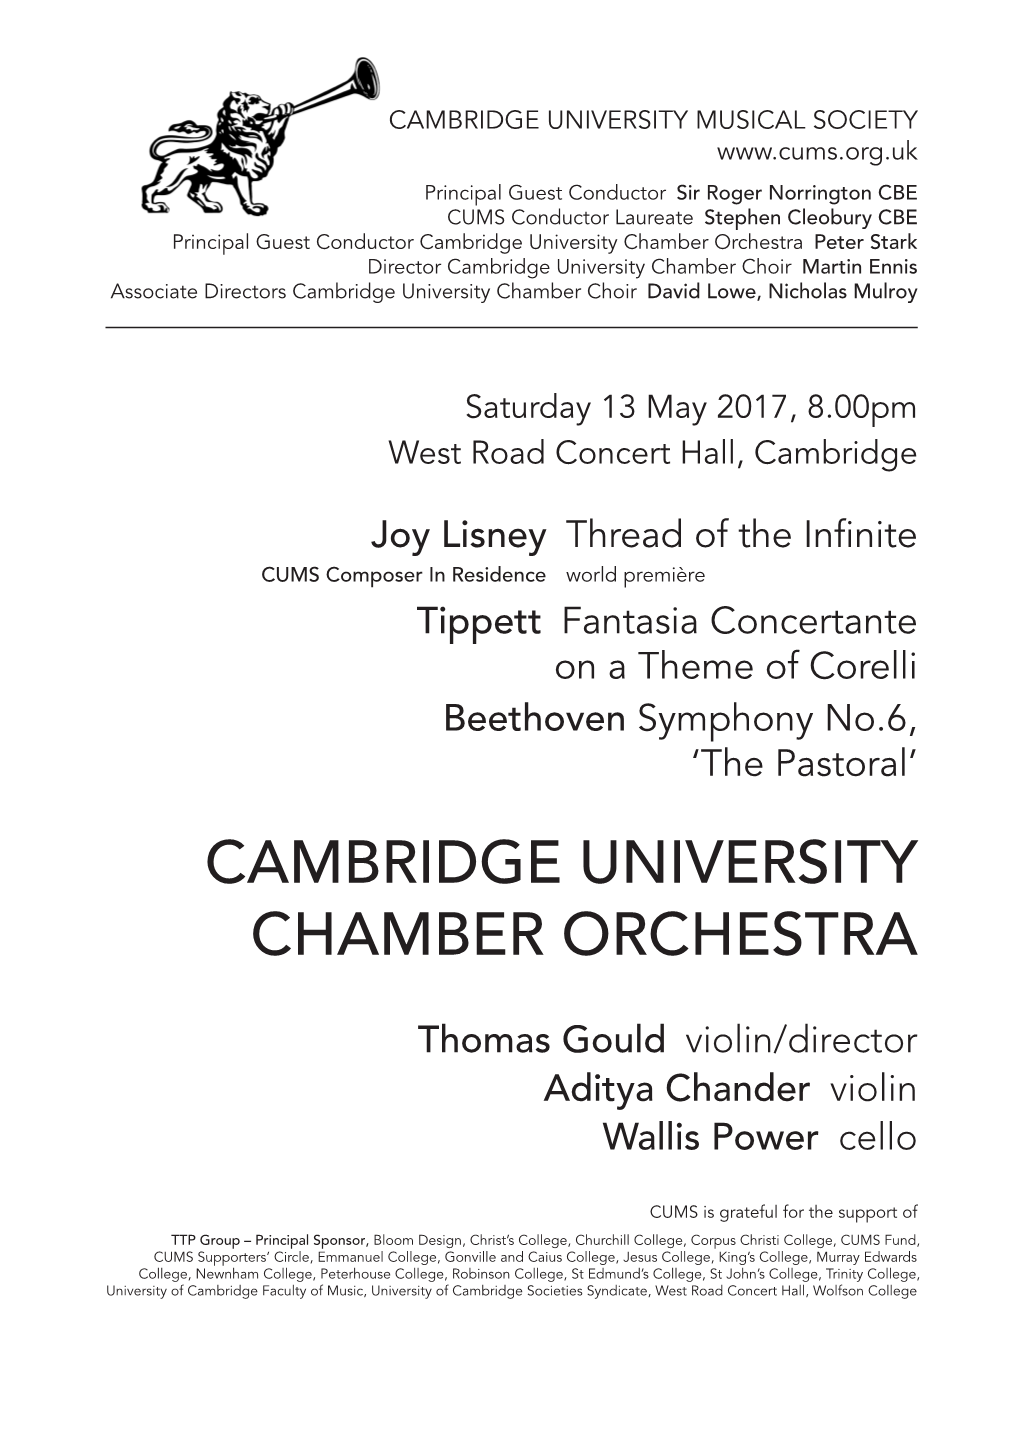 Cambridge University Chamber Orchestra